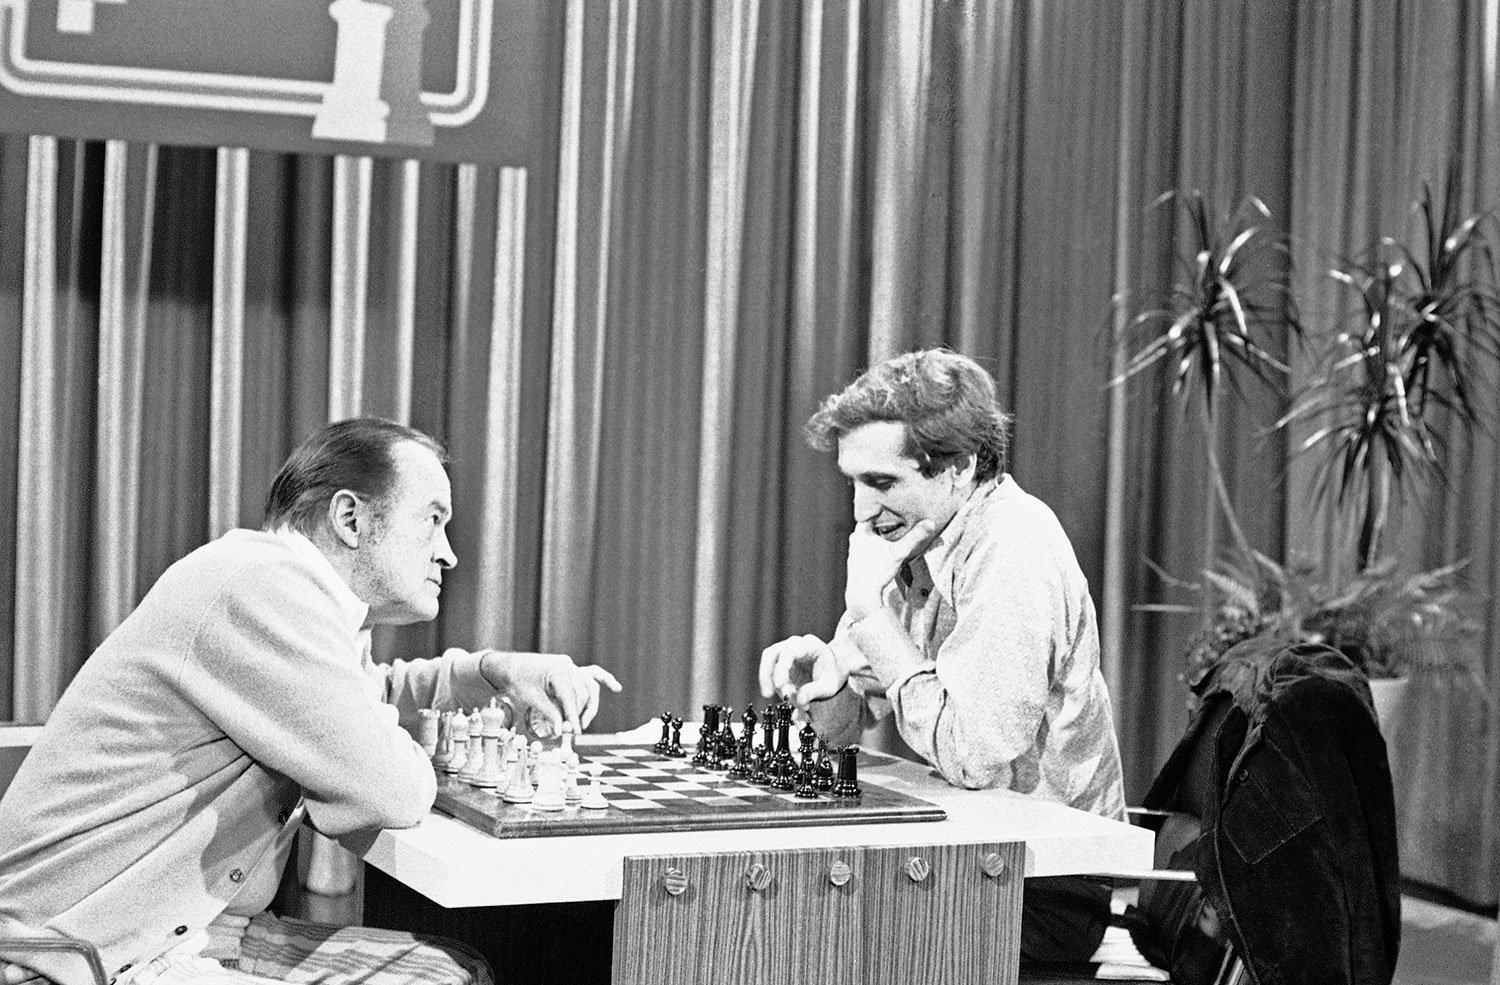 Bobby Fischer vs. Boris Spassky. Game one. World championship 1972.